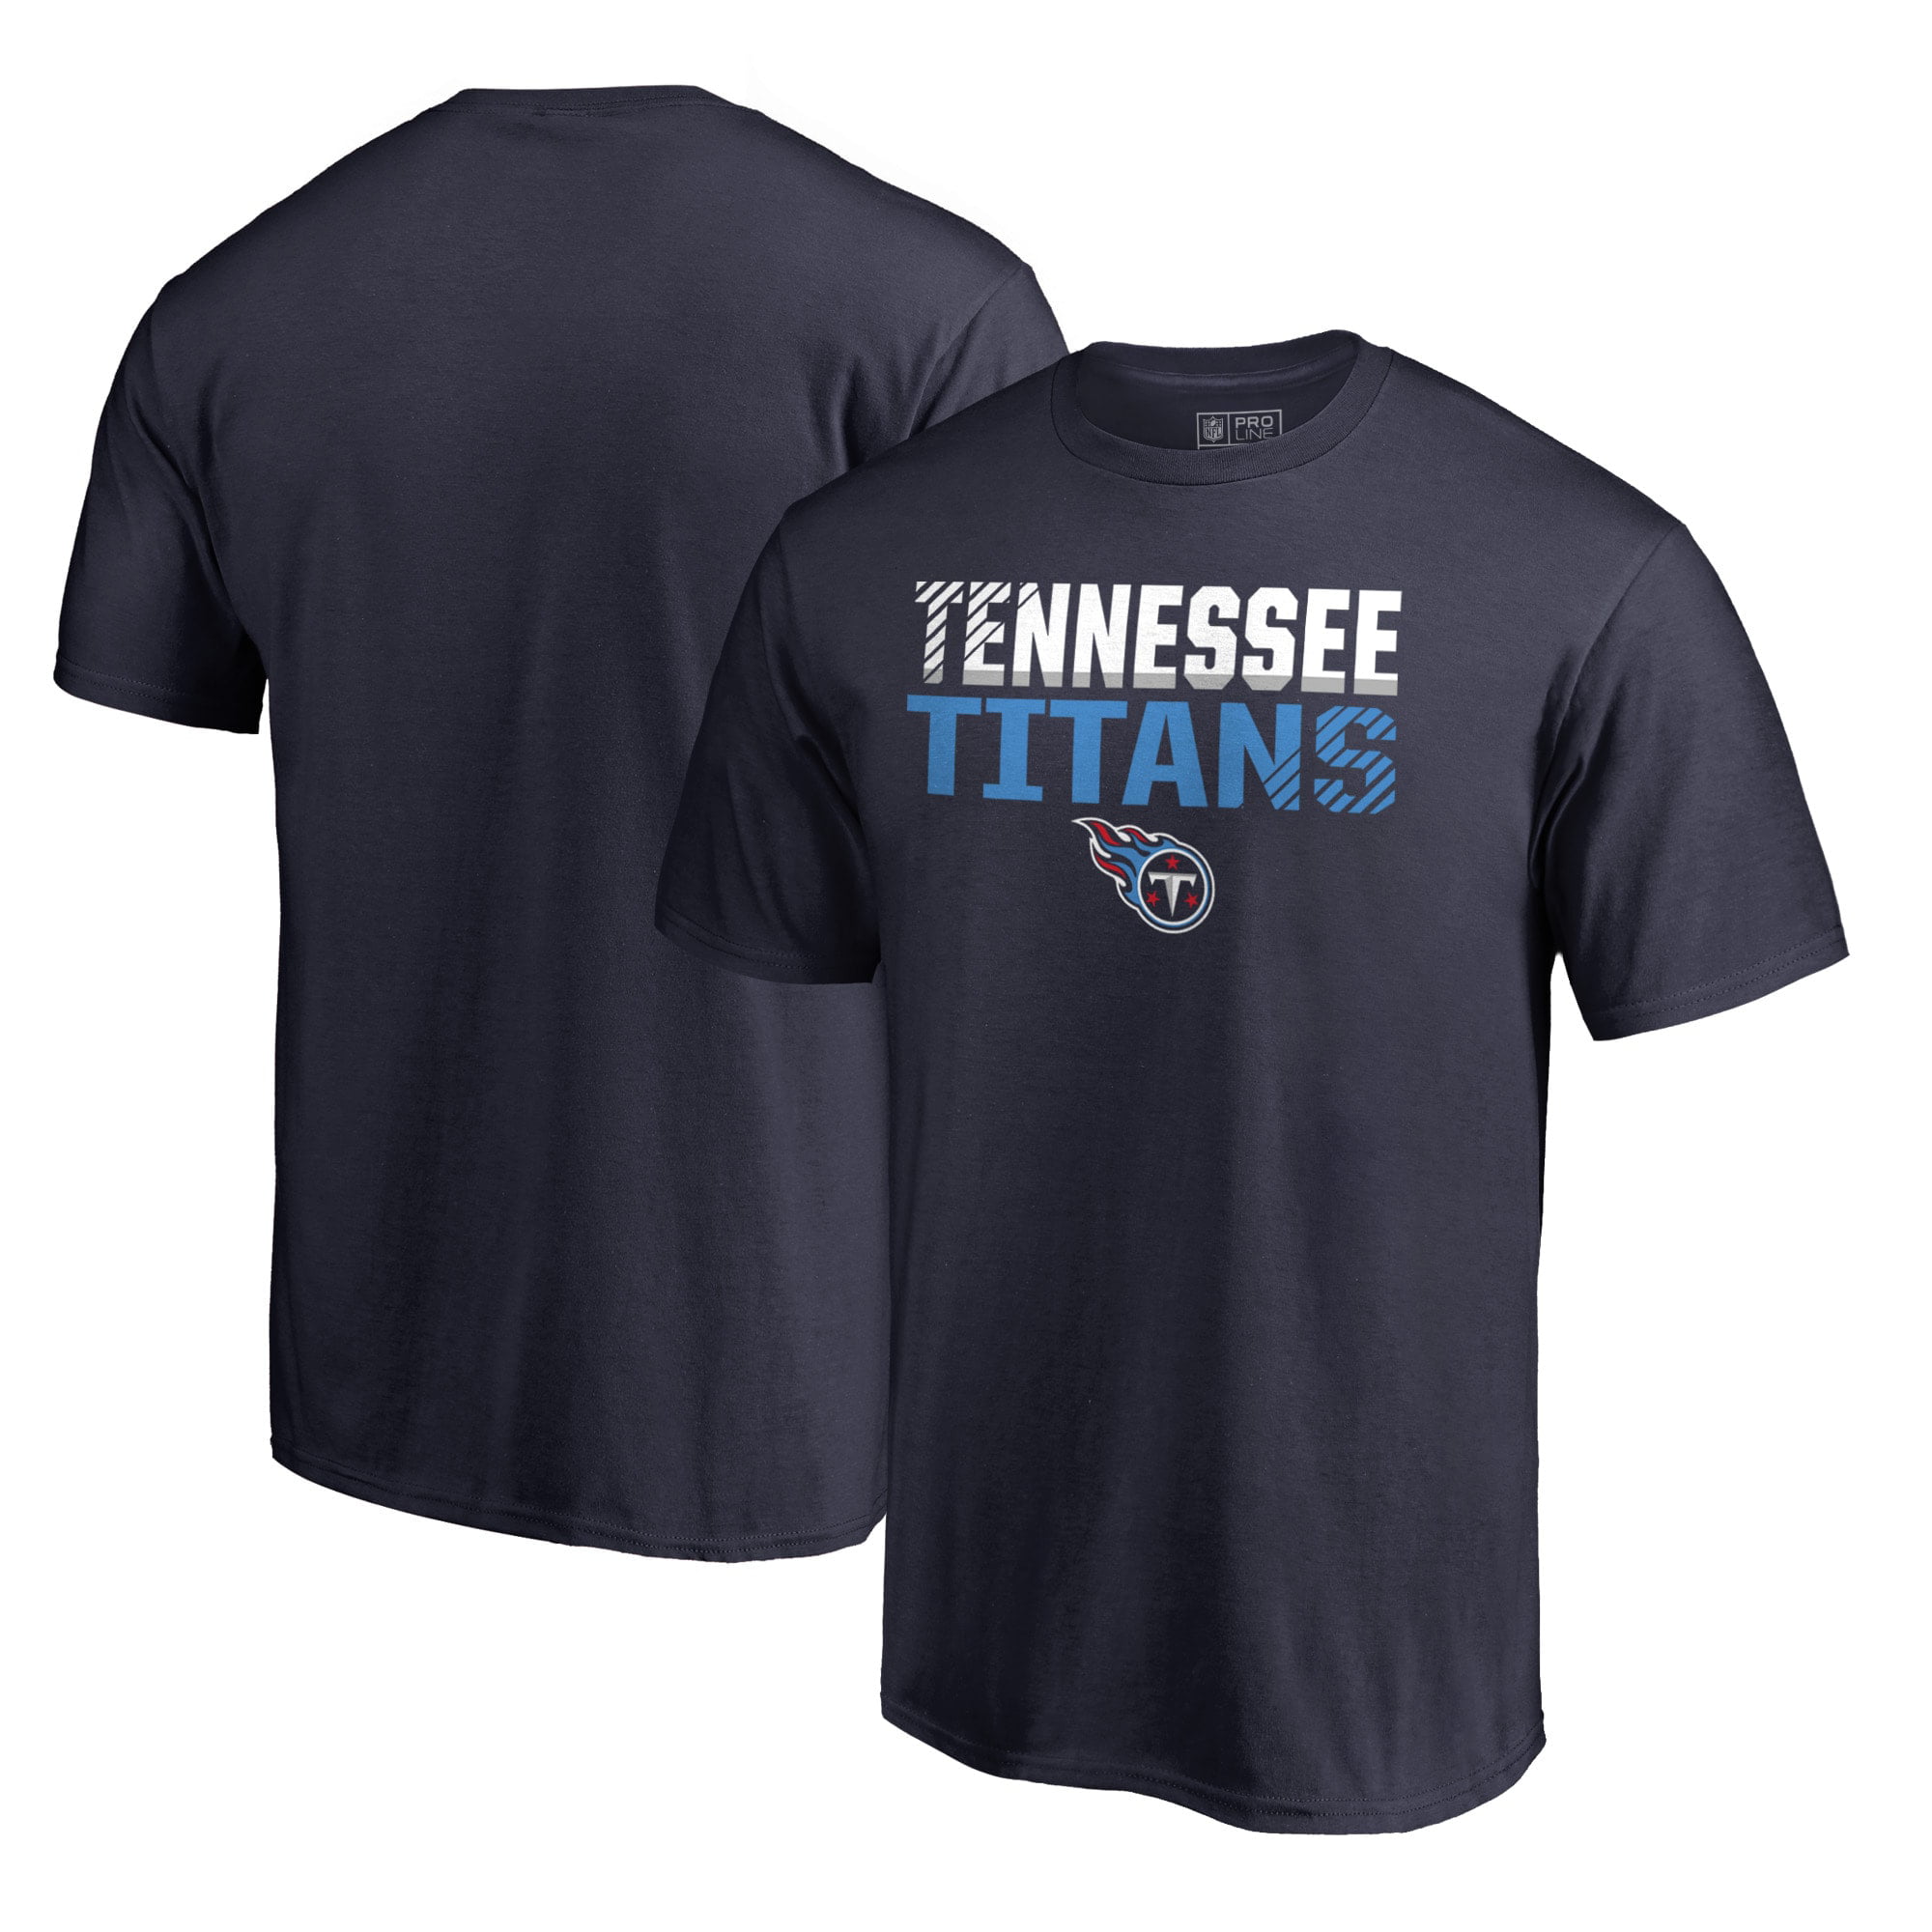 Tennessee Titans T-Shirts US Football Mens Short Sleeve Tee Training Tops S-5XL 